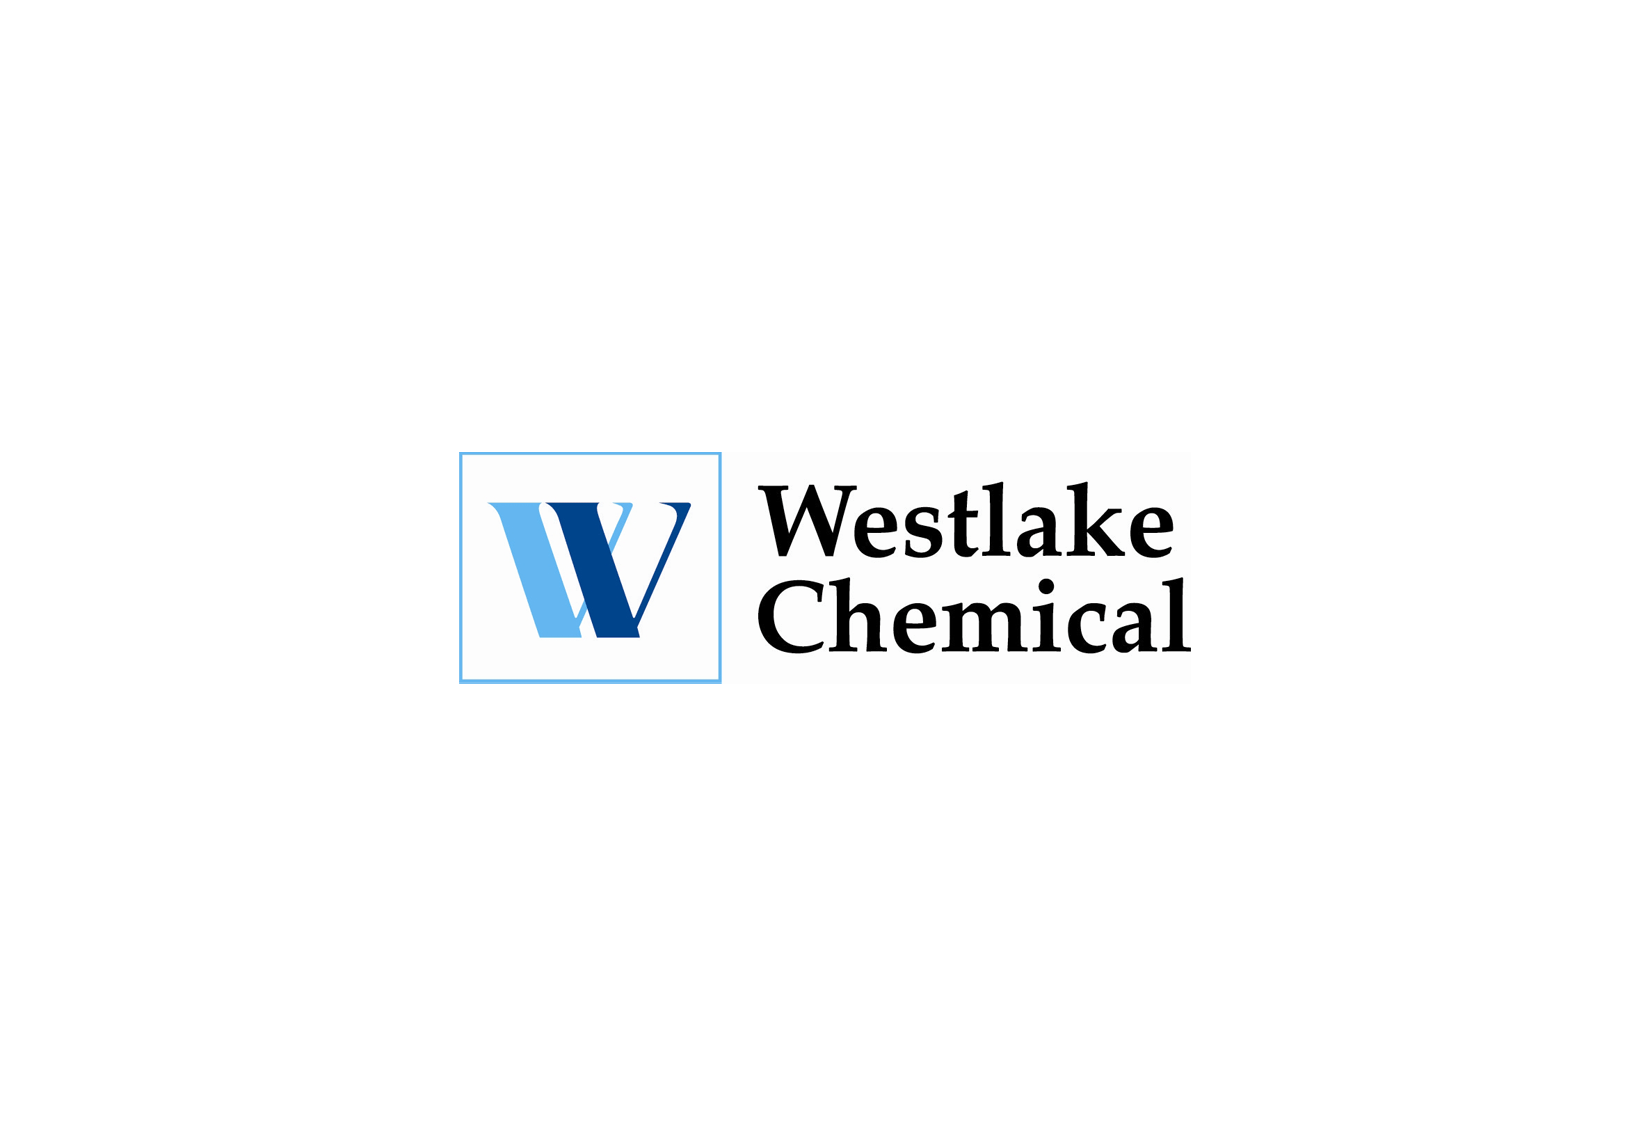 Westlake Logo - Westlake Chemical logo | Dwglogo